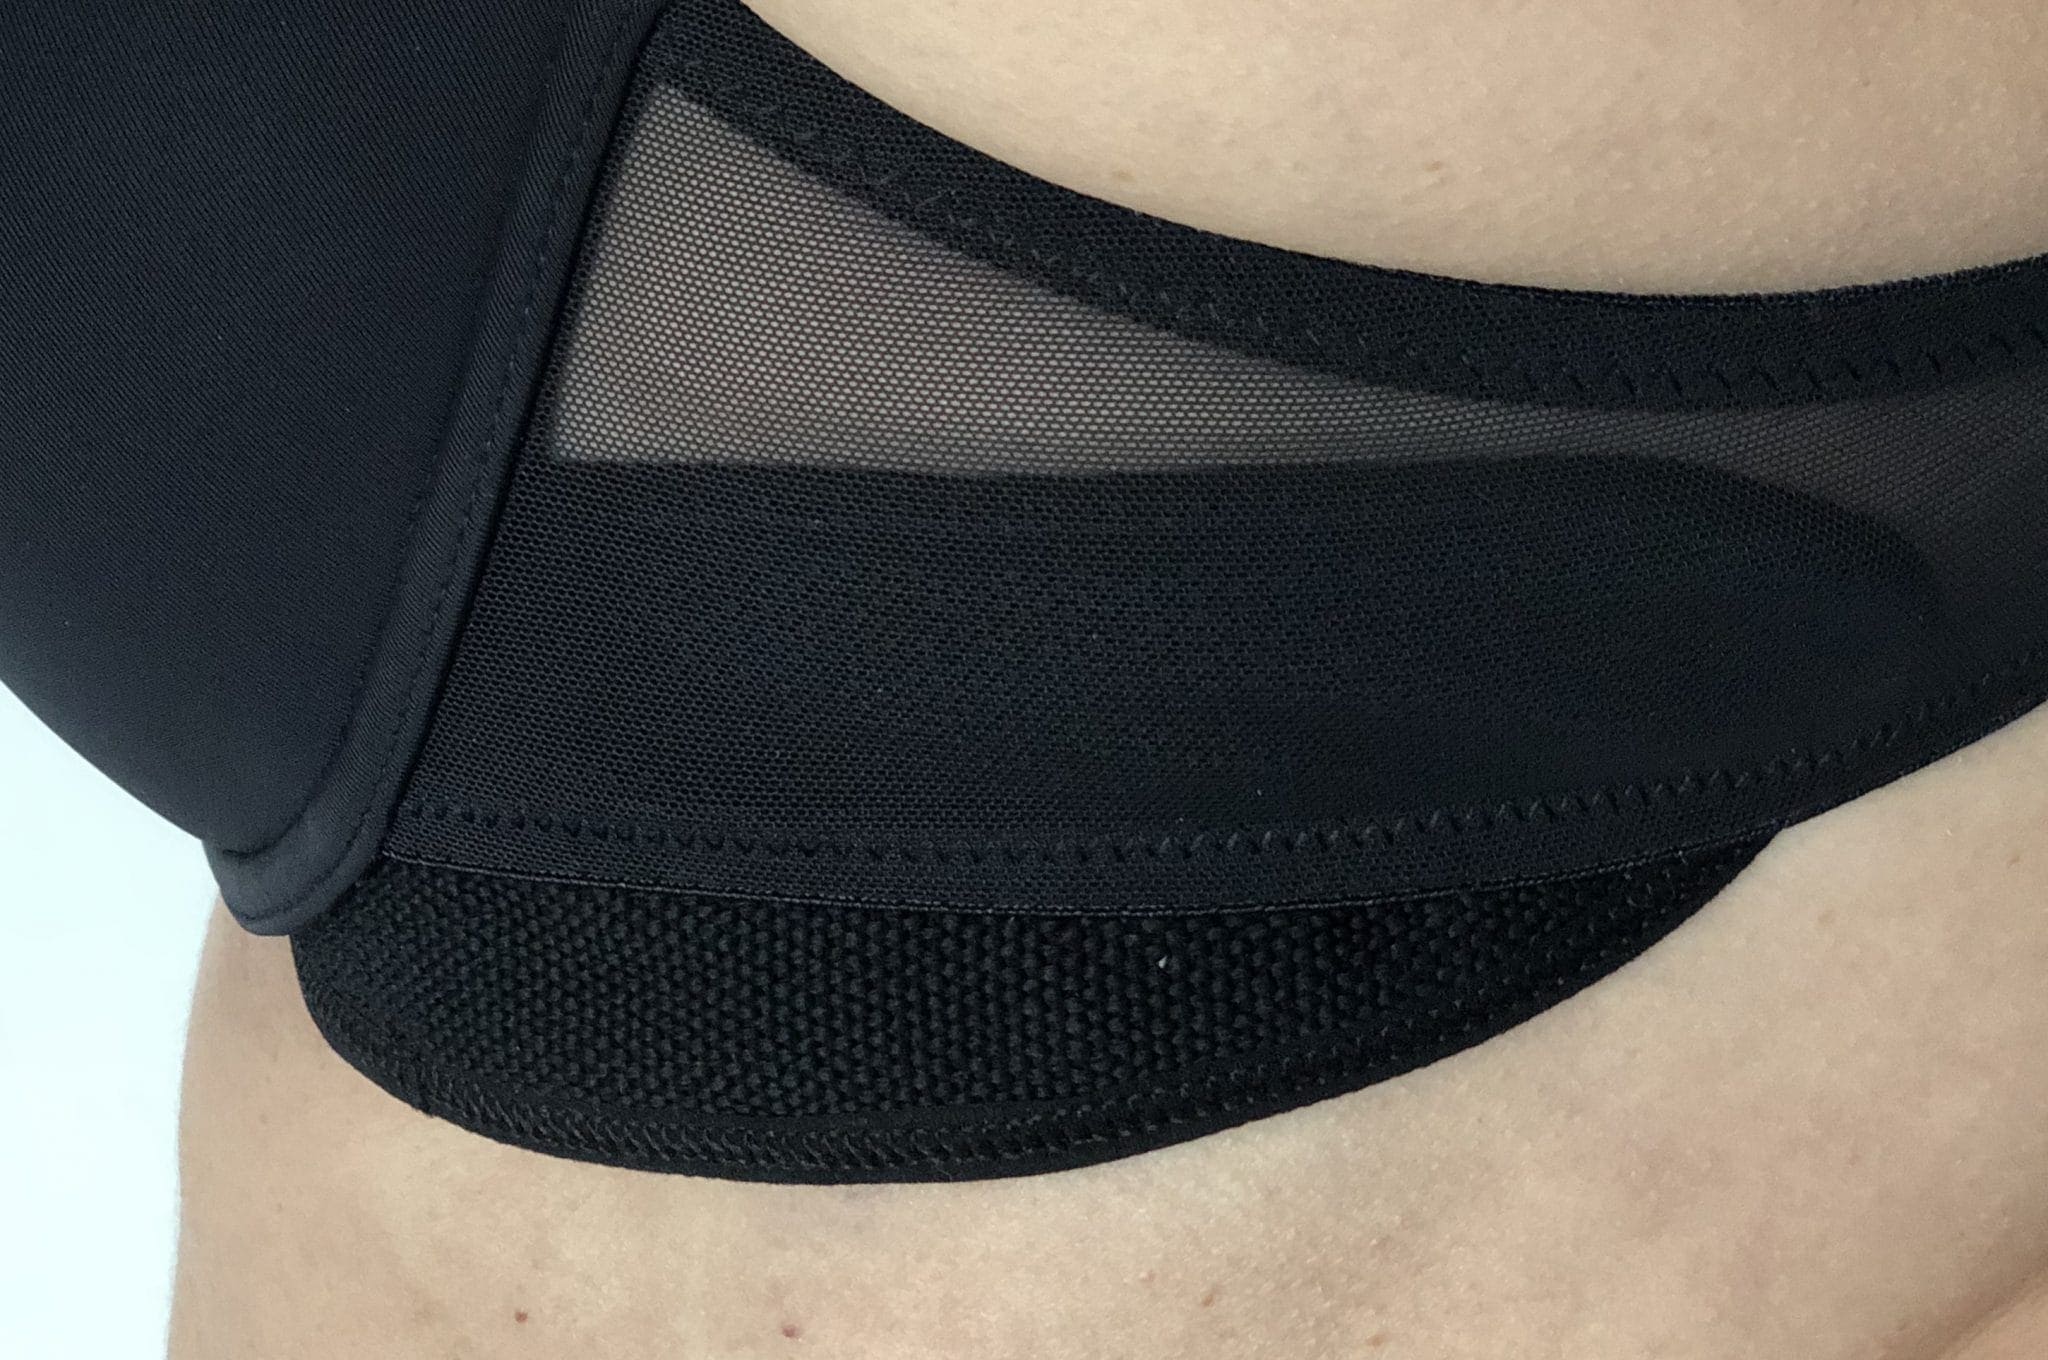 Sweat Liner - Breast Sweat Pads & Bra Liners » Chaffree